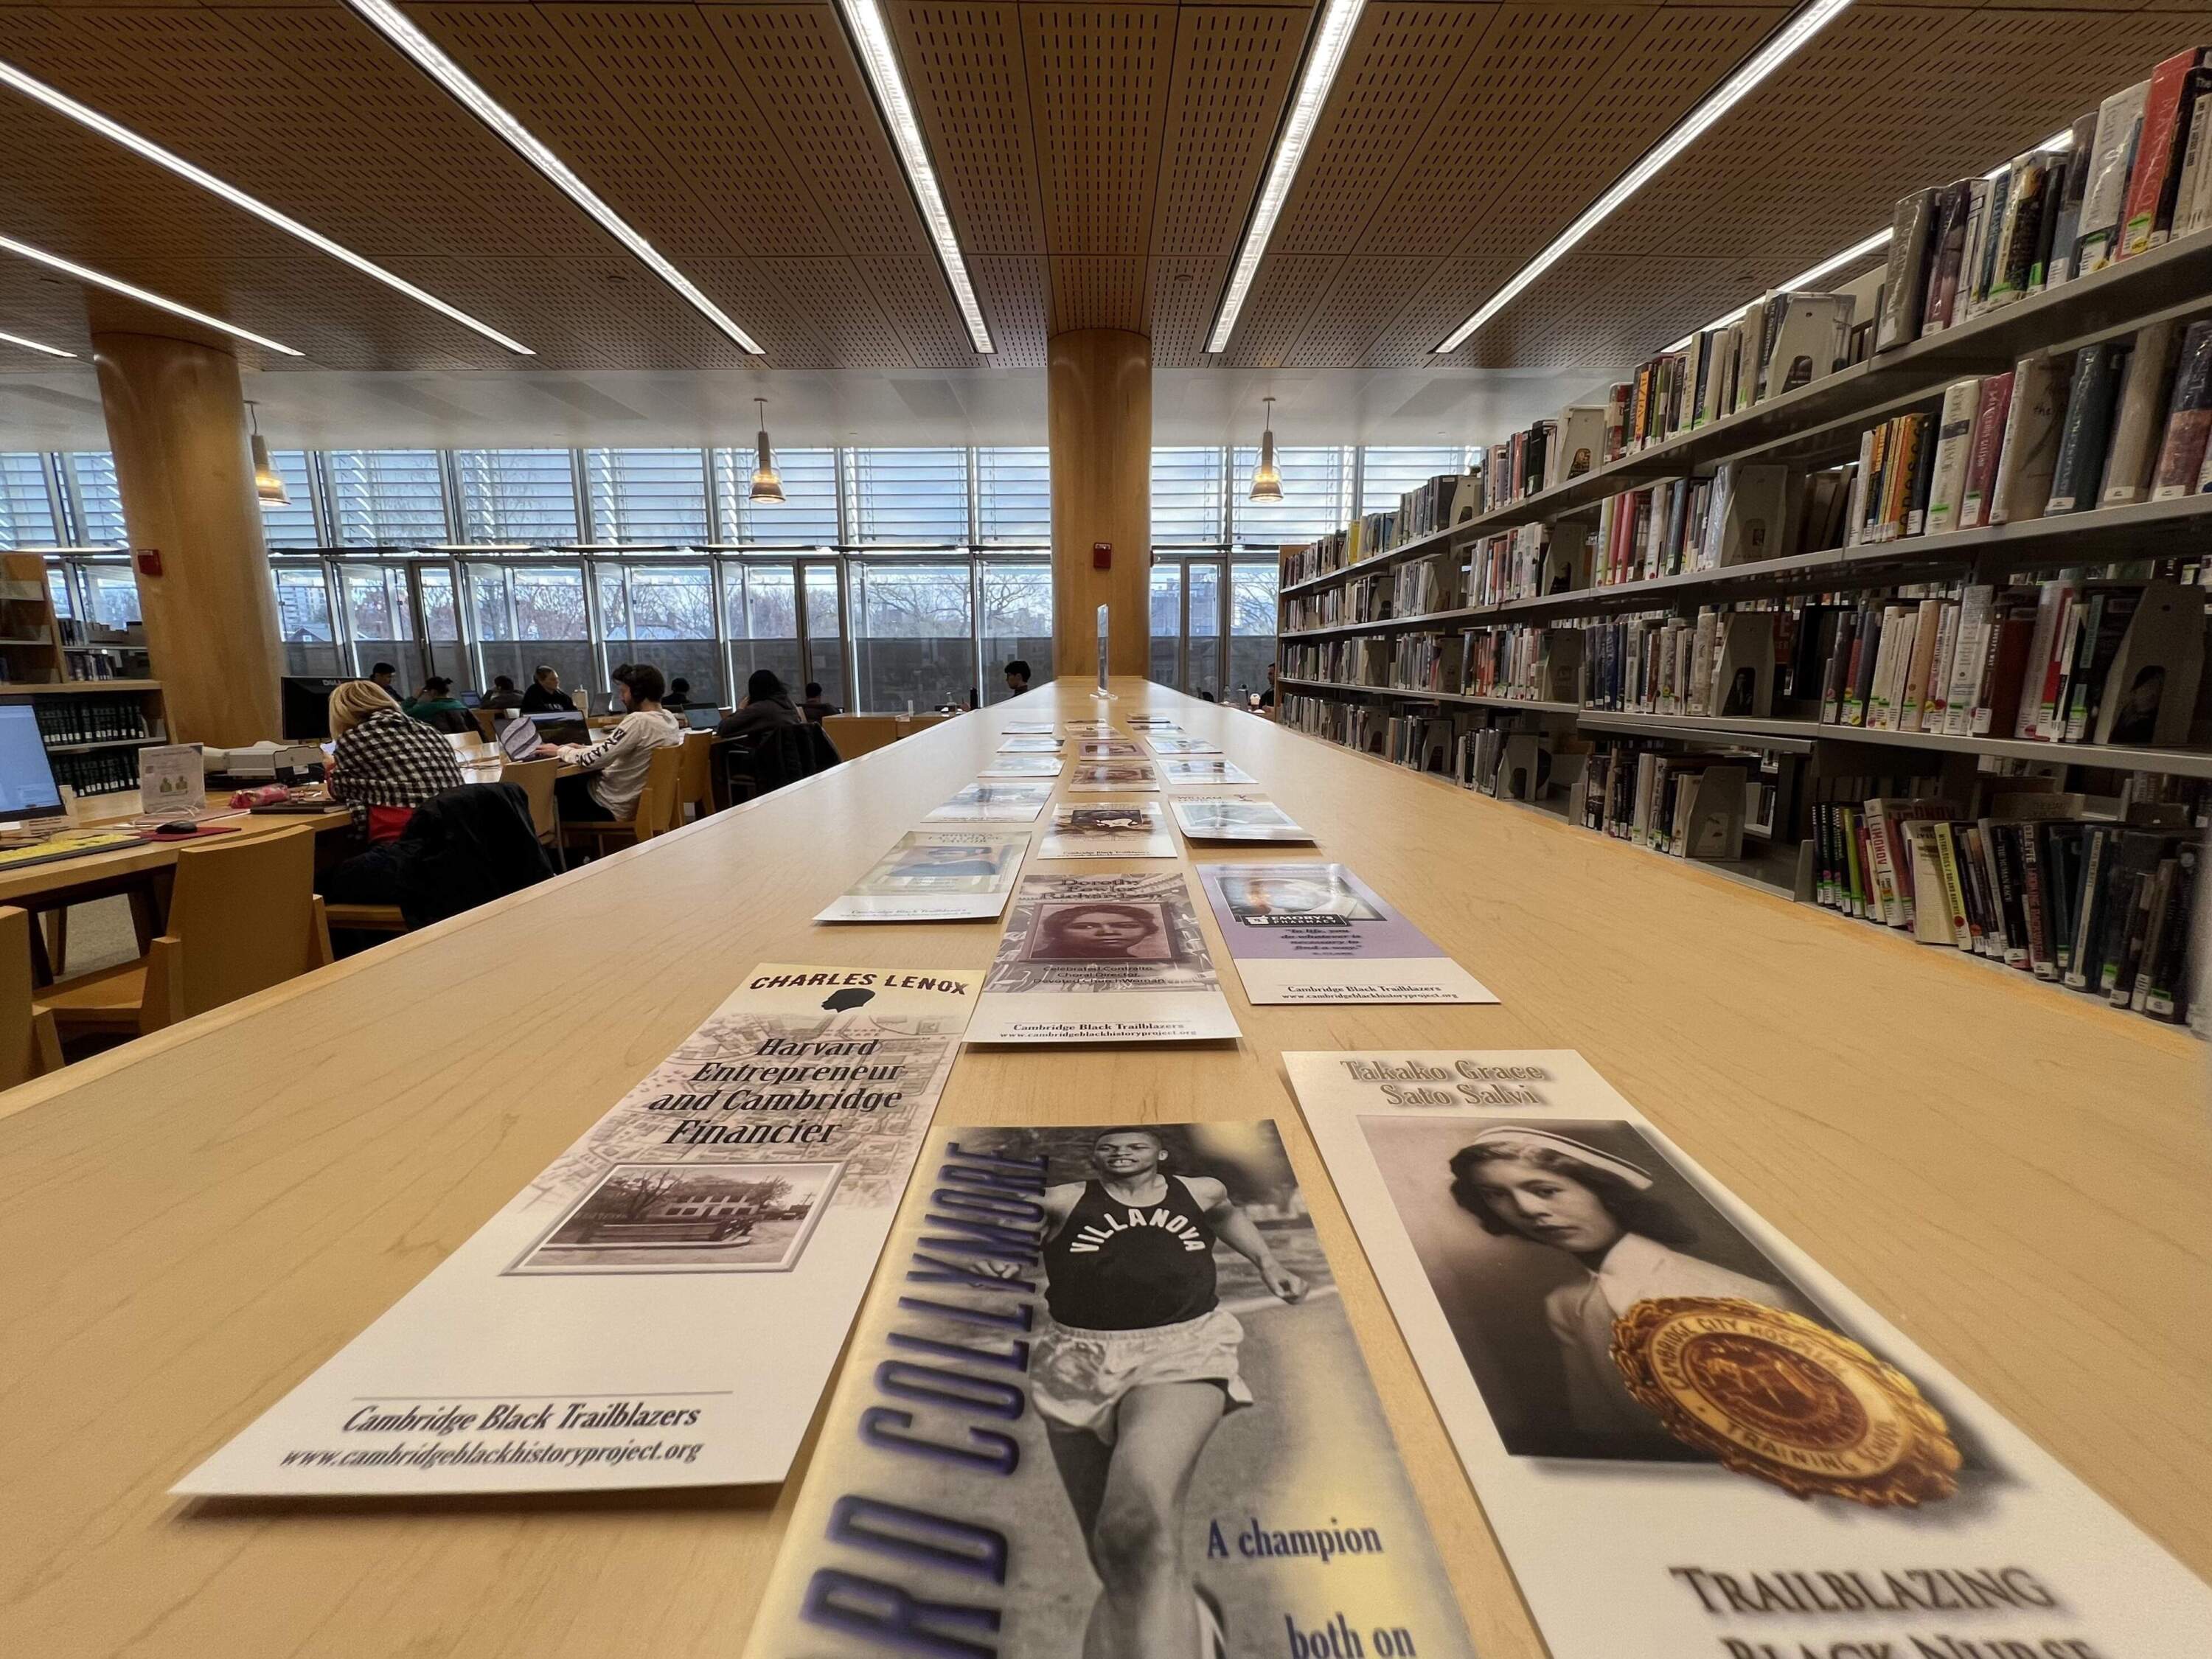 The Cambridge Black History Project's bookmarks at the Cambridge Public Library. (Solon Kelleher/WBUR)